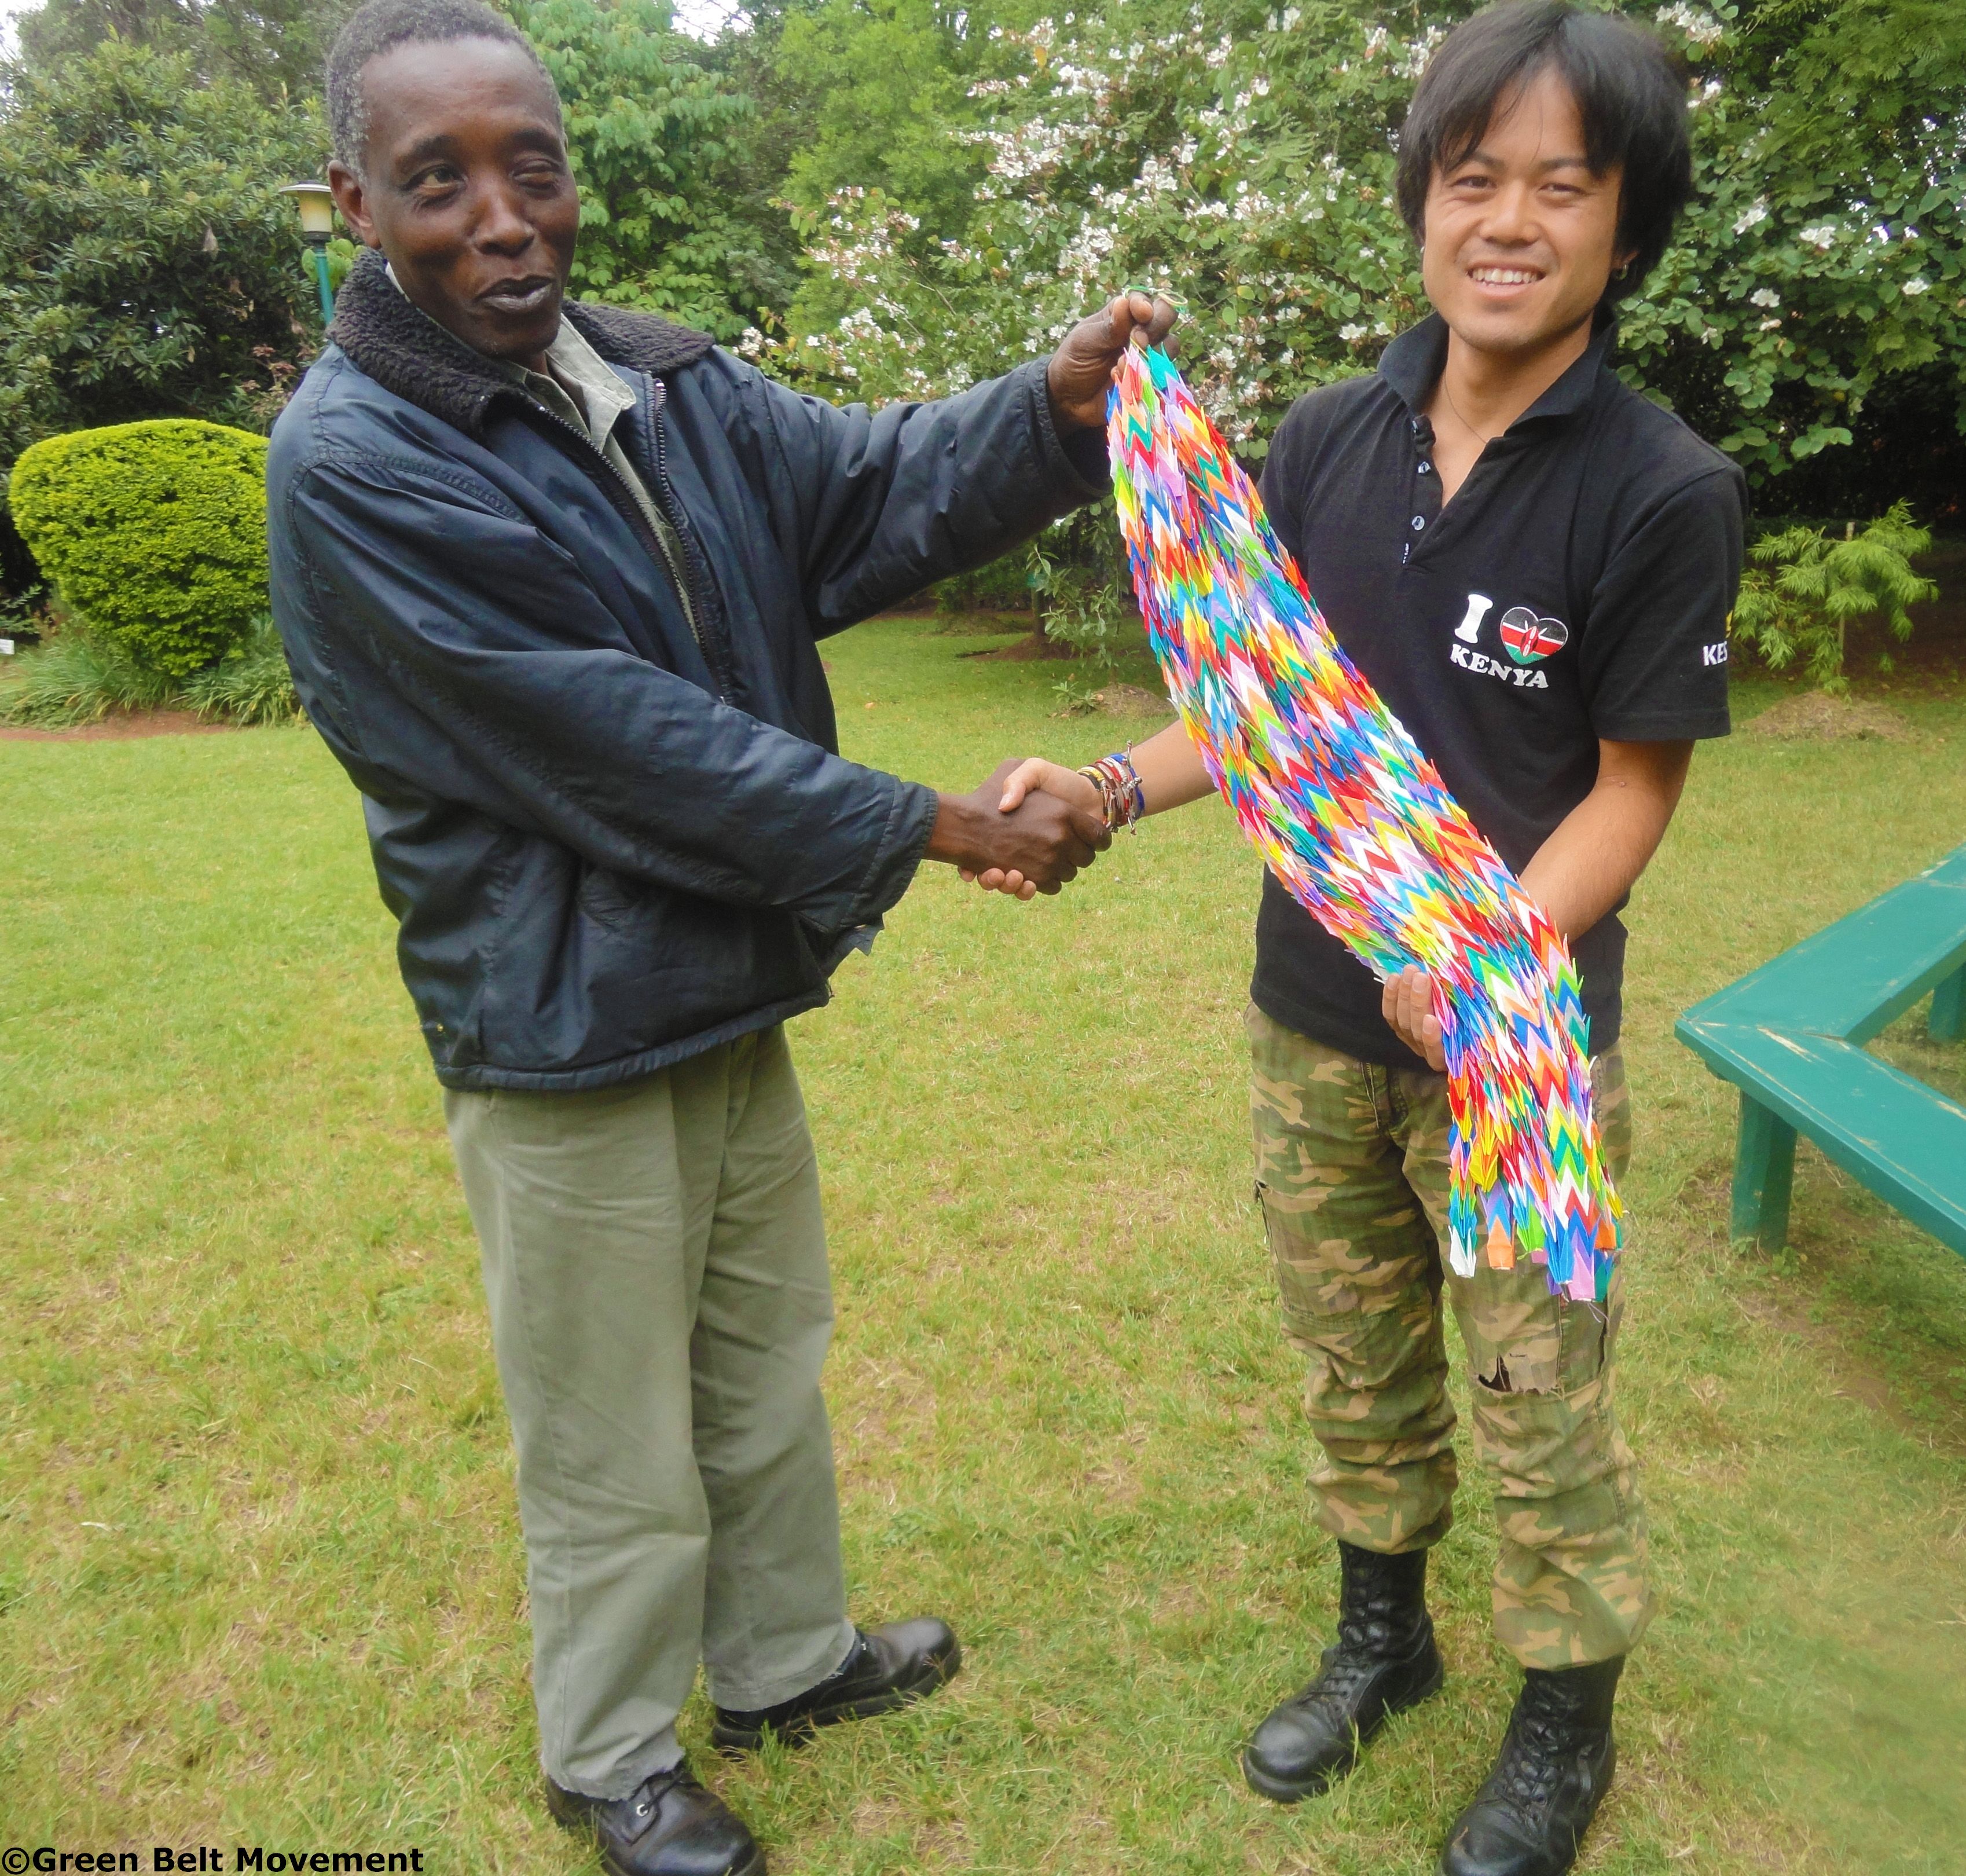 Yosumo Minato 'Maina' (right) presents the 1000 origami paper cranes to GBM's Njogu Kahare